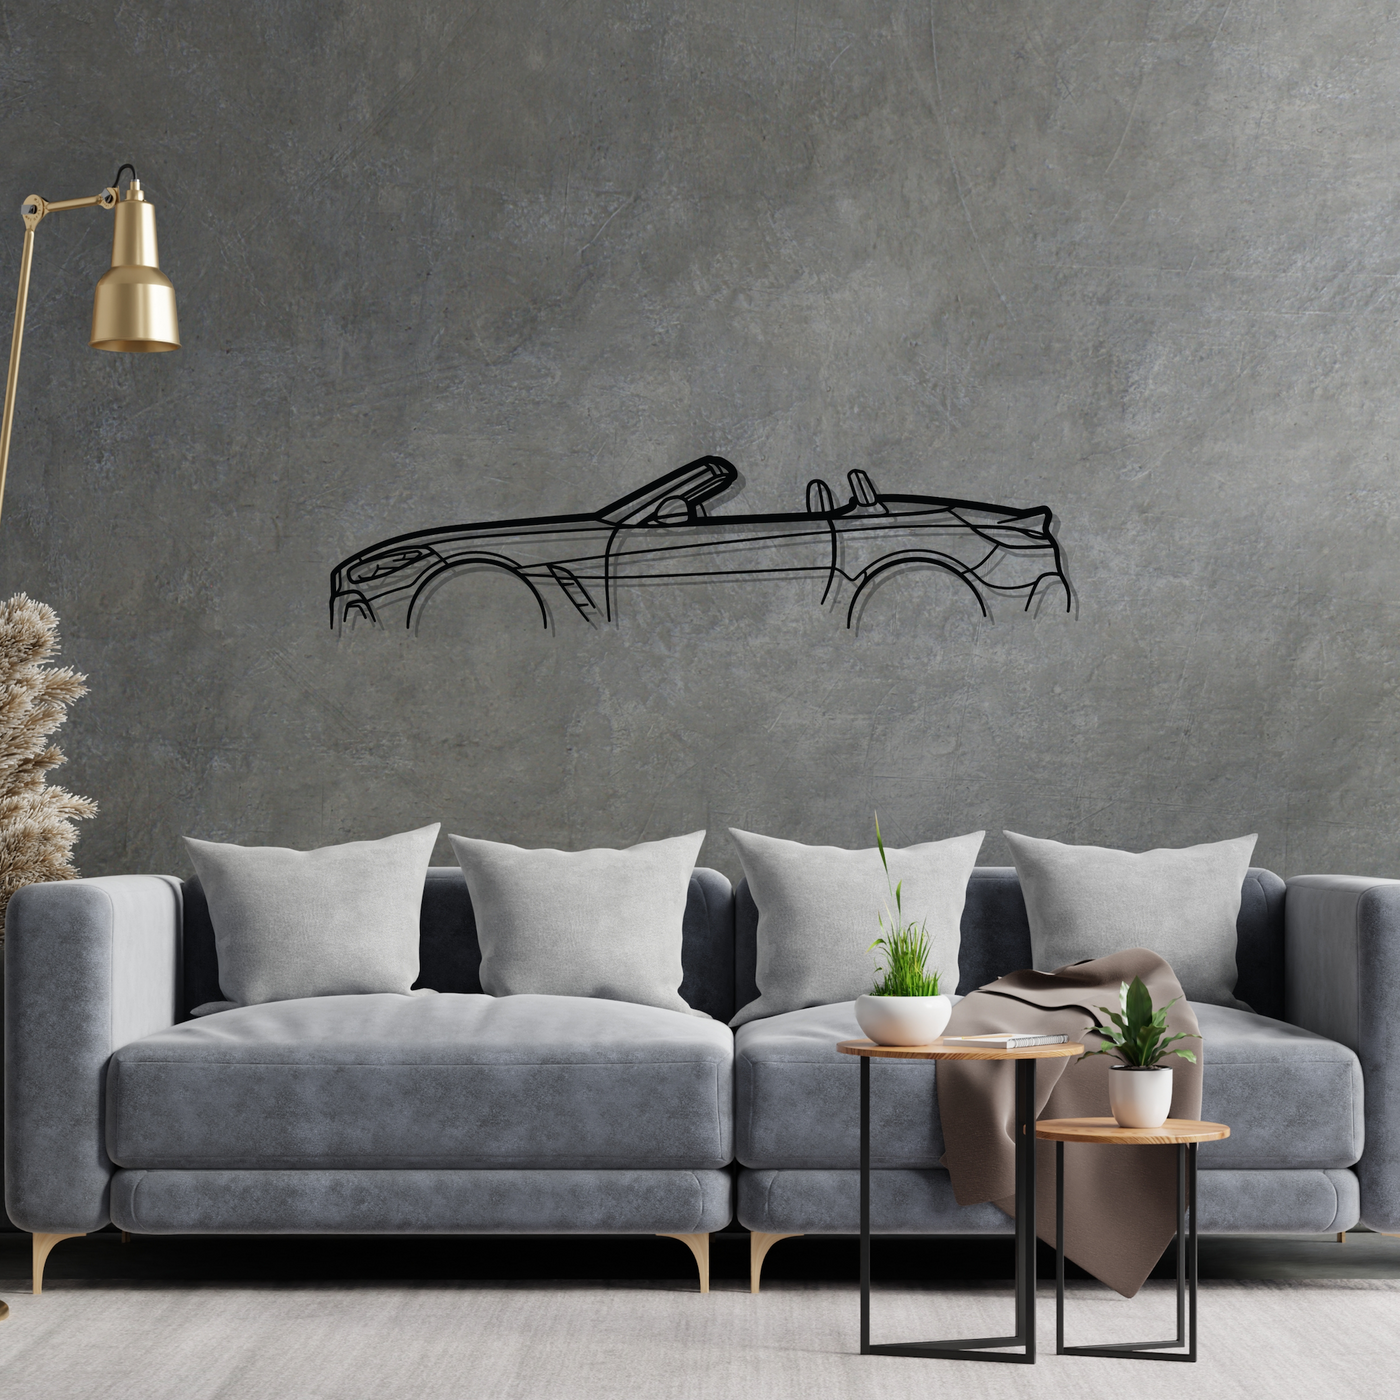 Z4 Roadster G29 Classic Metal Silhouette Wall Art